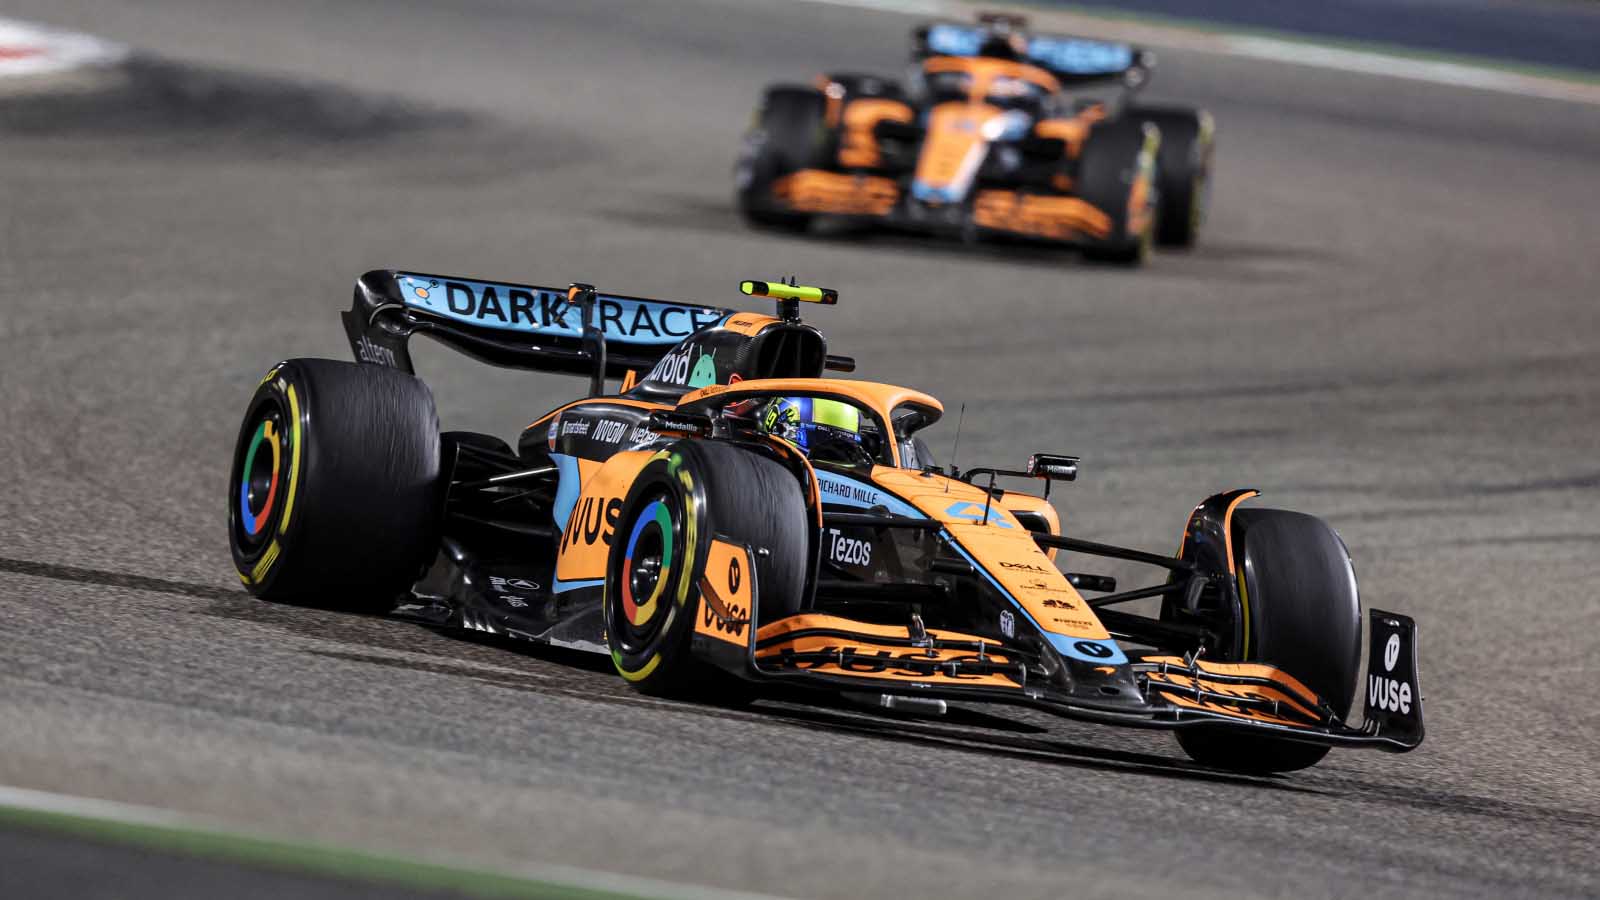 Lando Norris leading the second McLaren of Daniel Ricciardo at the season-opening Bahrain Grand Prix. A tough start which saw them finish 14th and 15th.